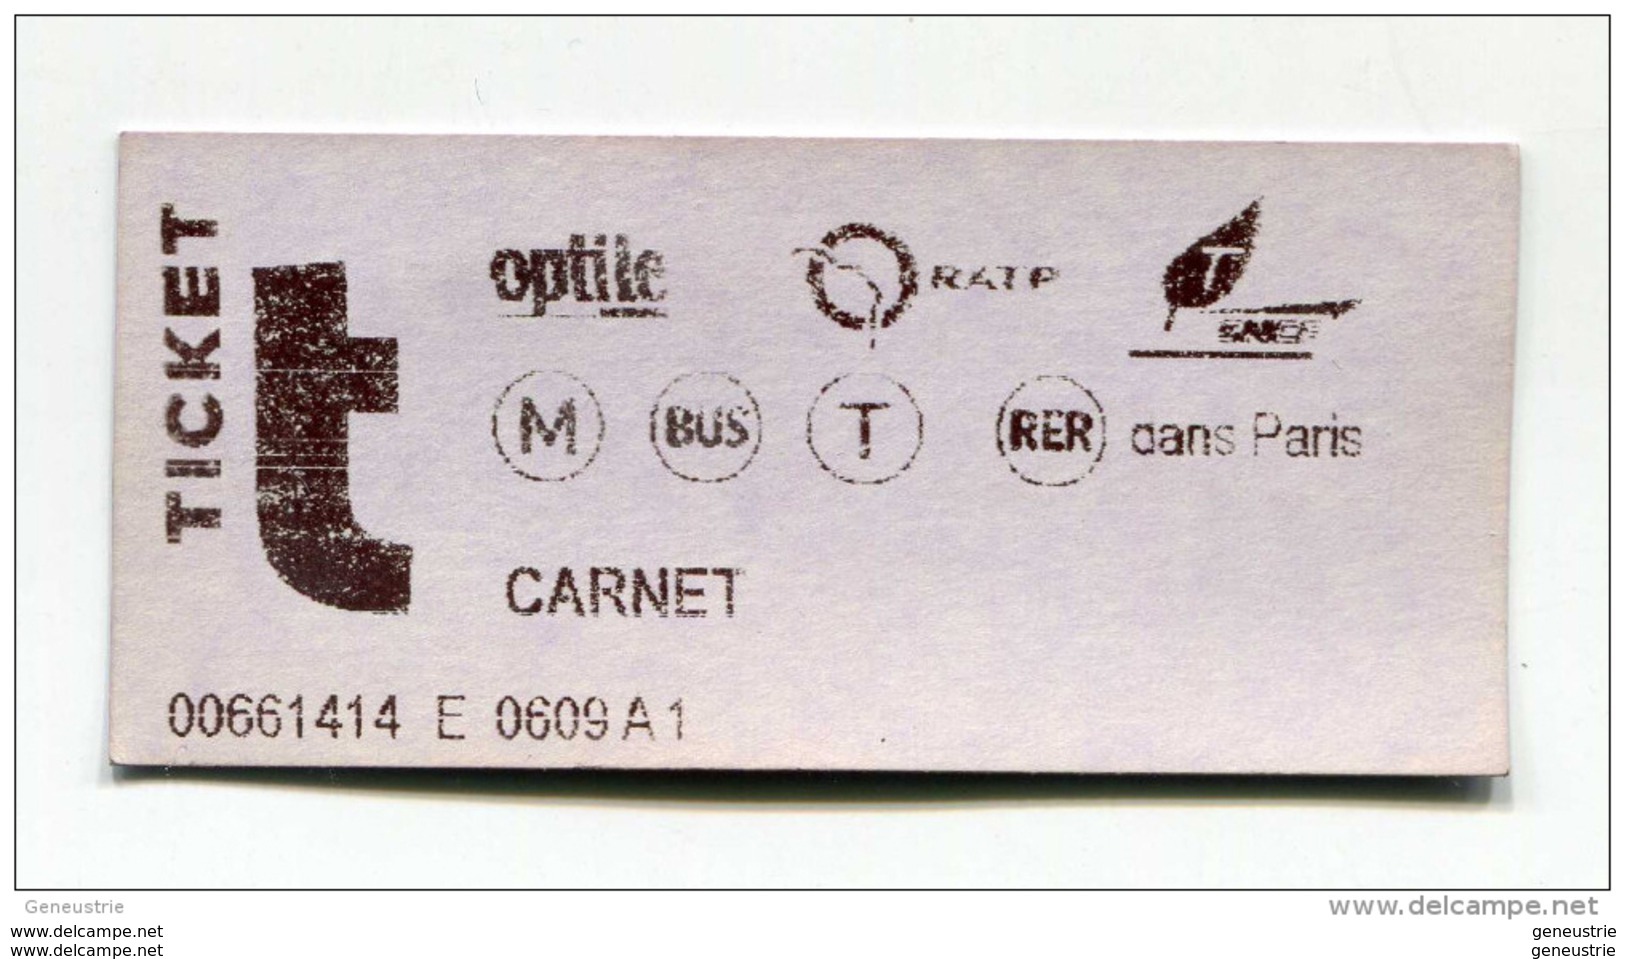 Ticket De Metro, Bus RER - Paris - 2004 - Billet RATP - Train Ticket Transportation - Europe